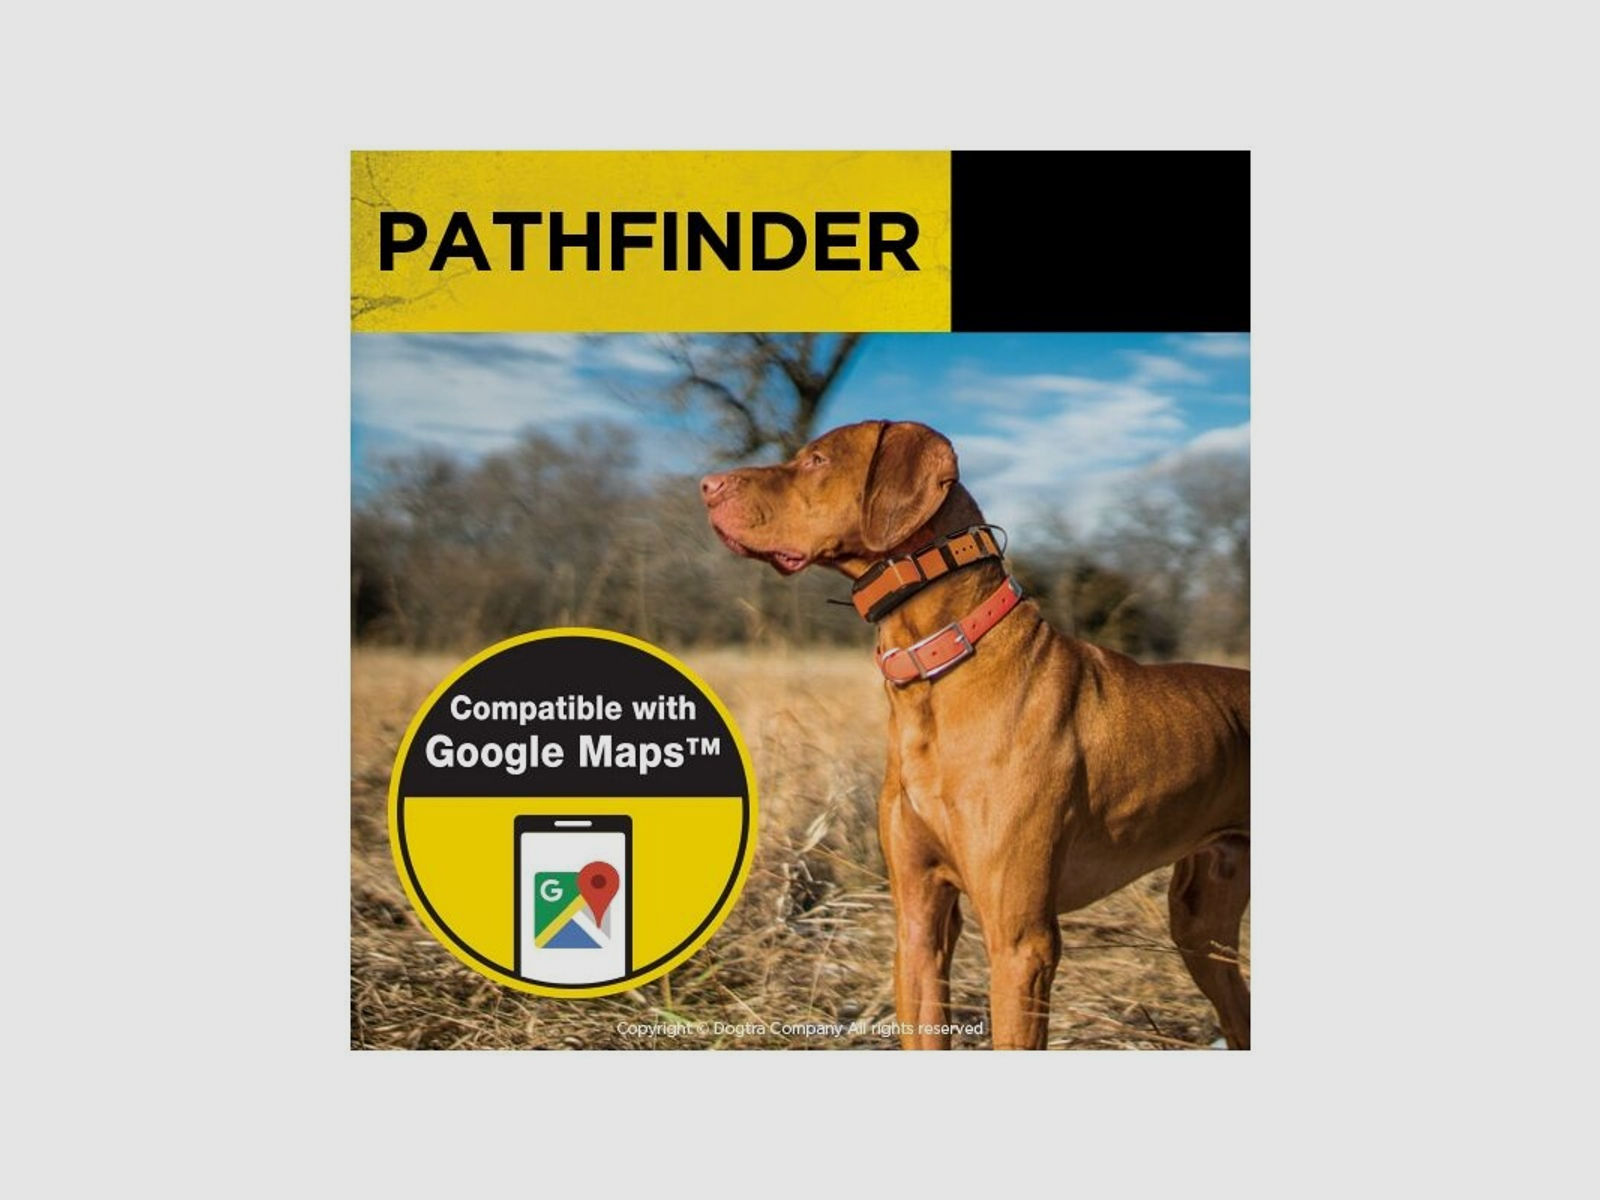 Dogtra	 GPS Pathfinder